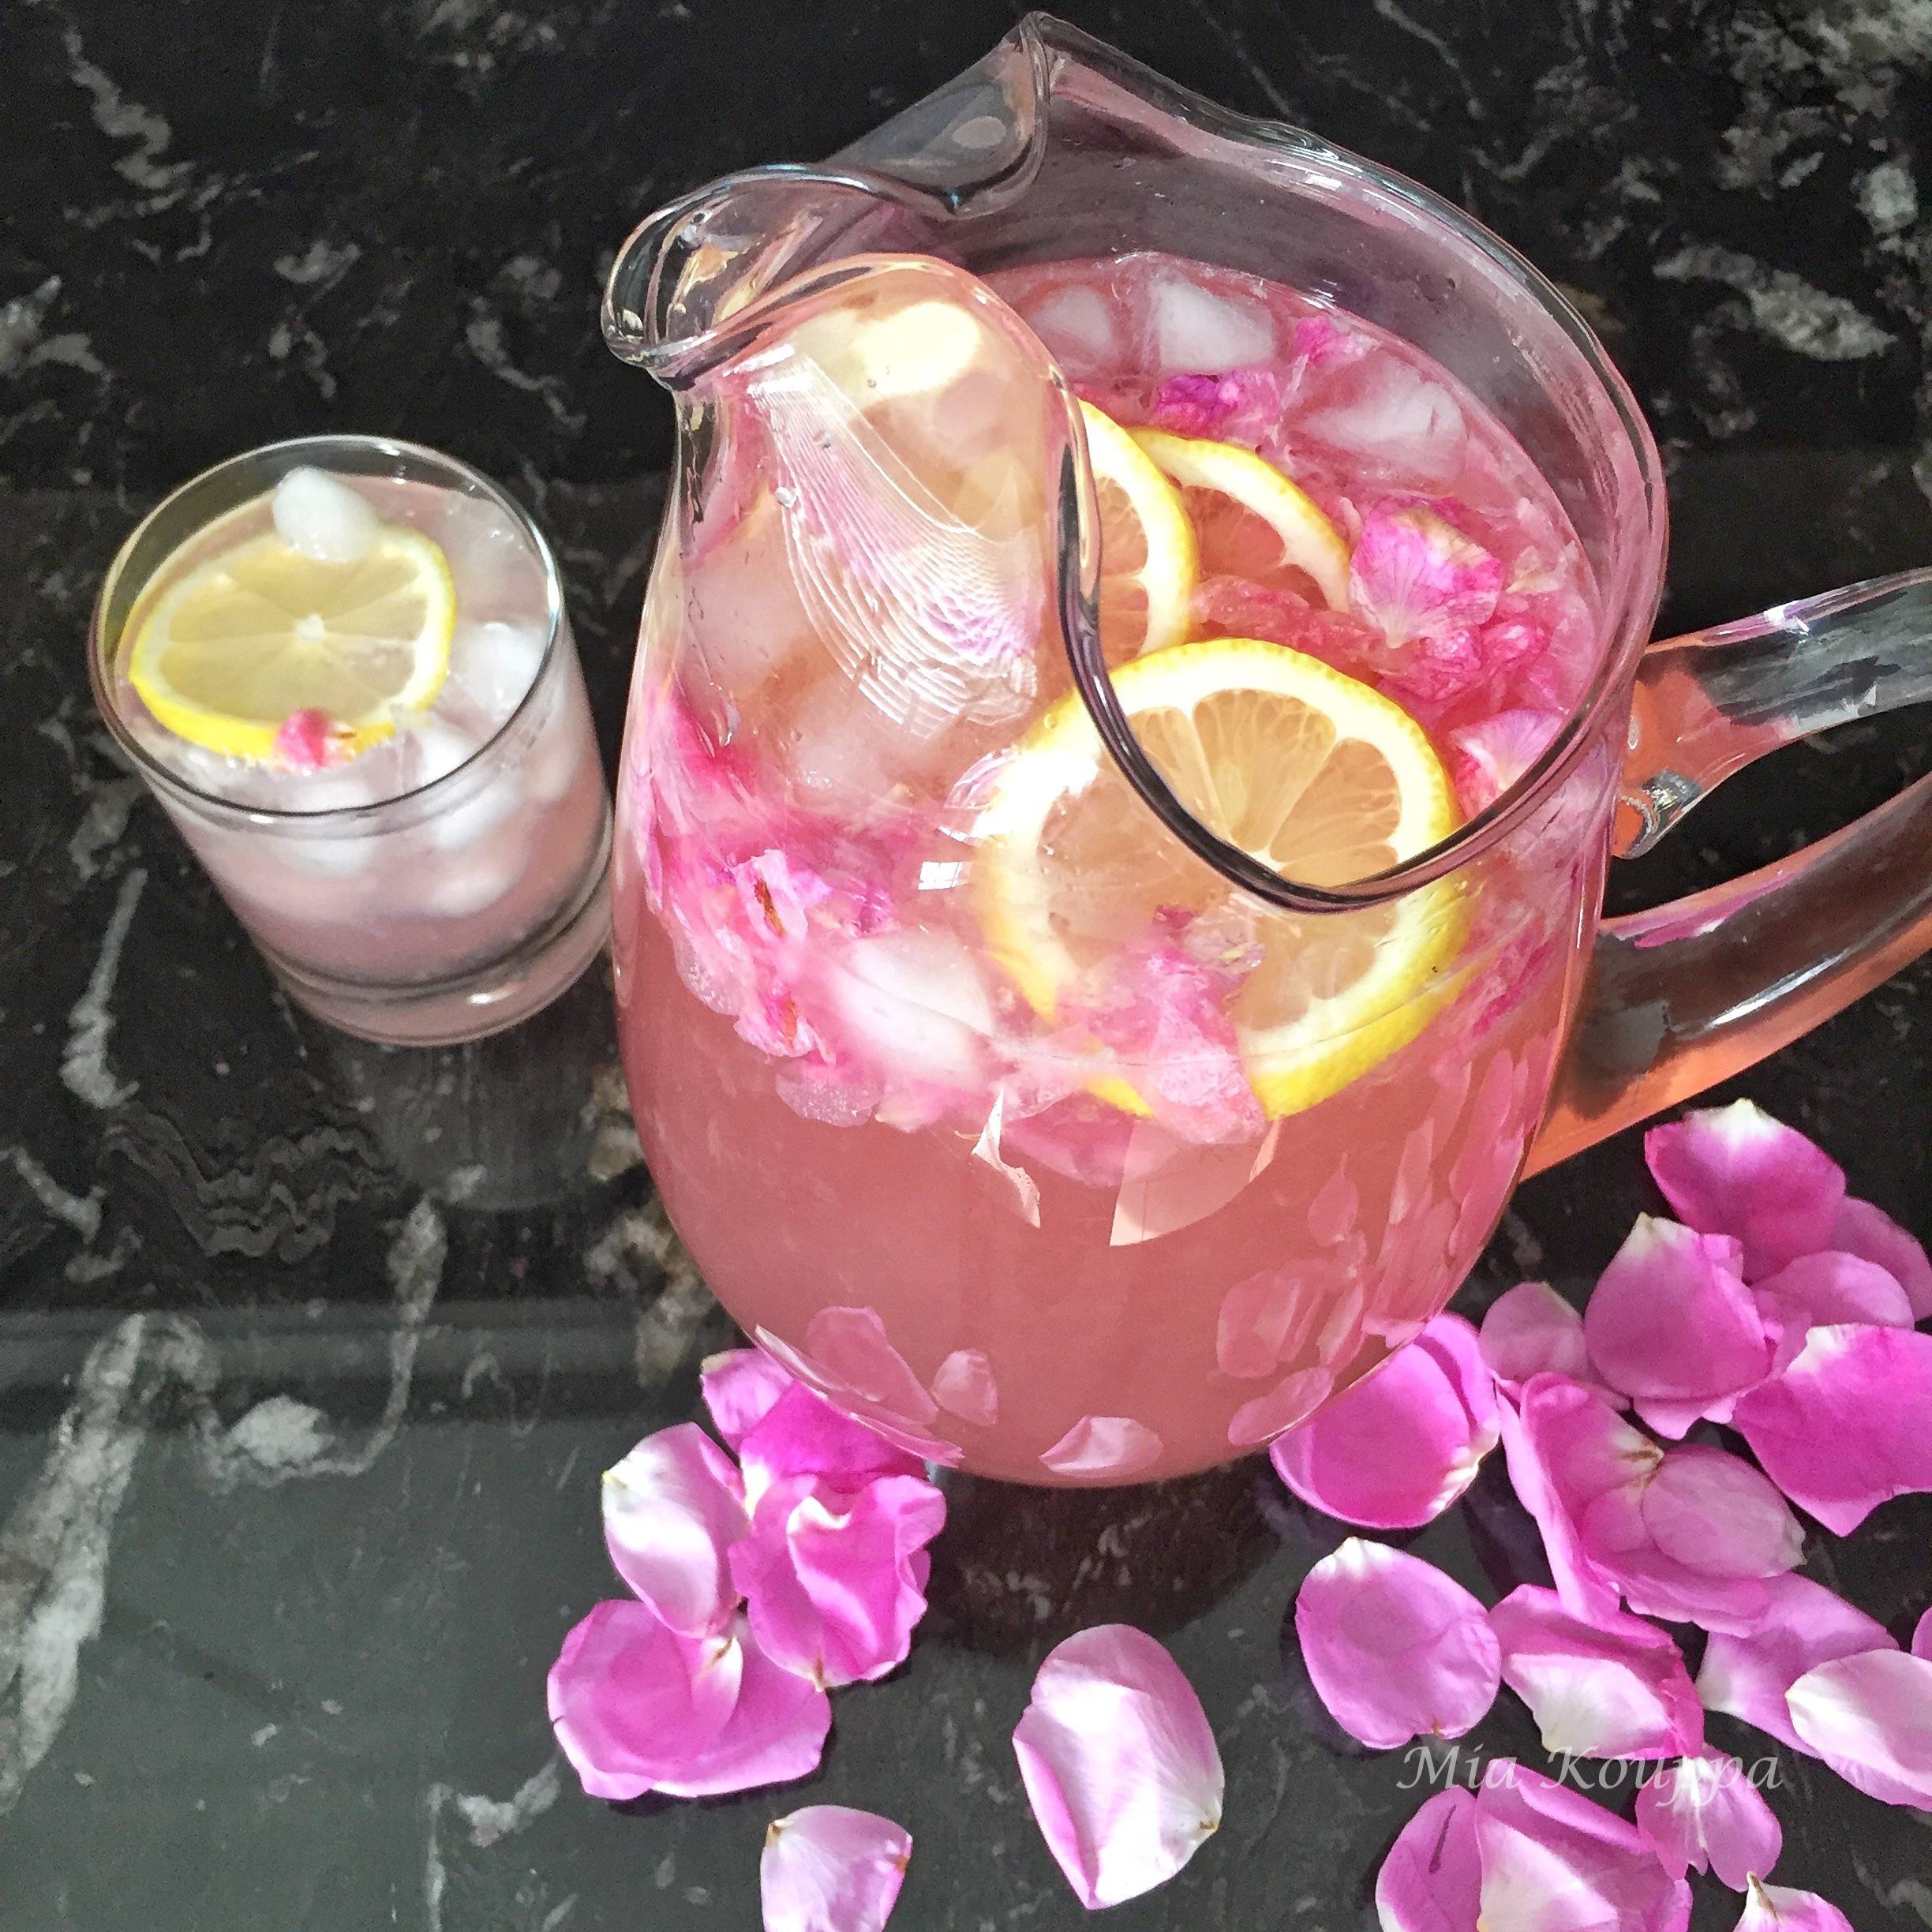 Rose flavoured lemonade